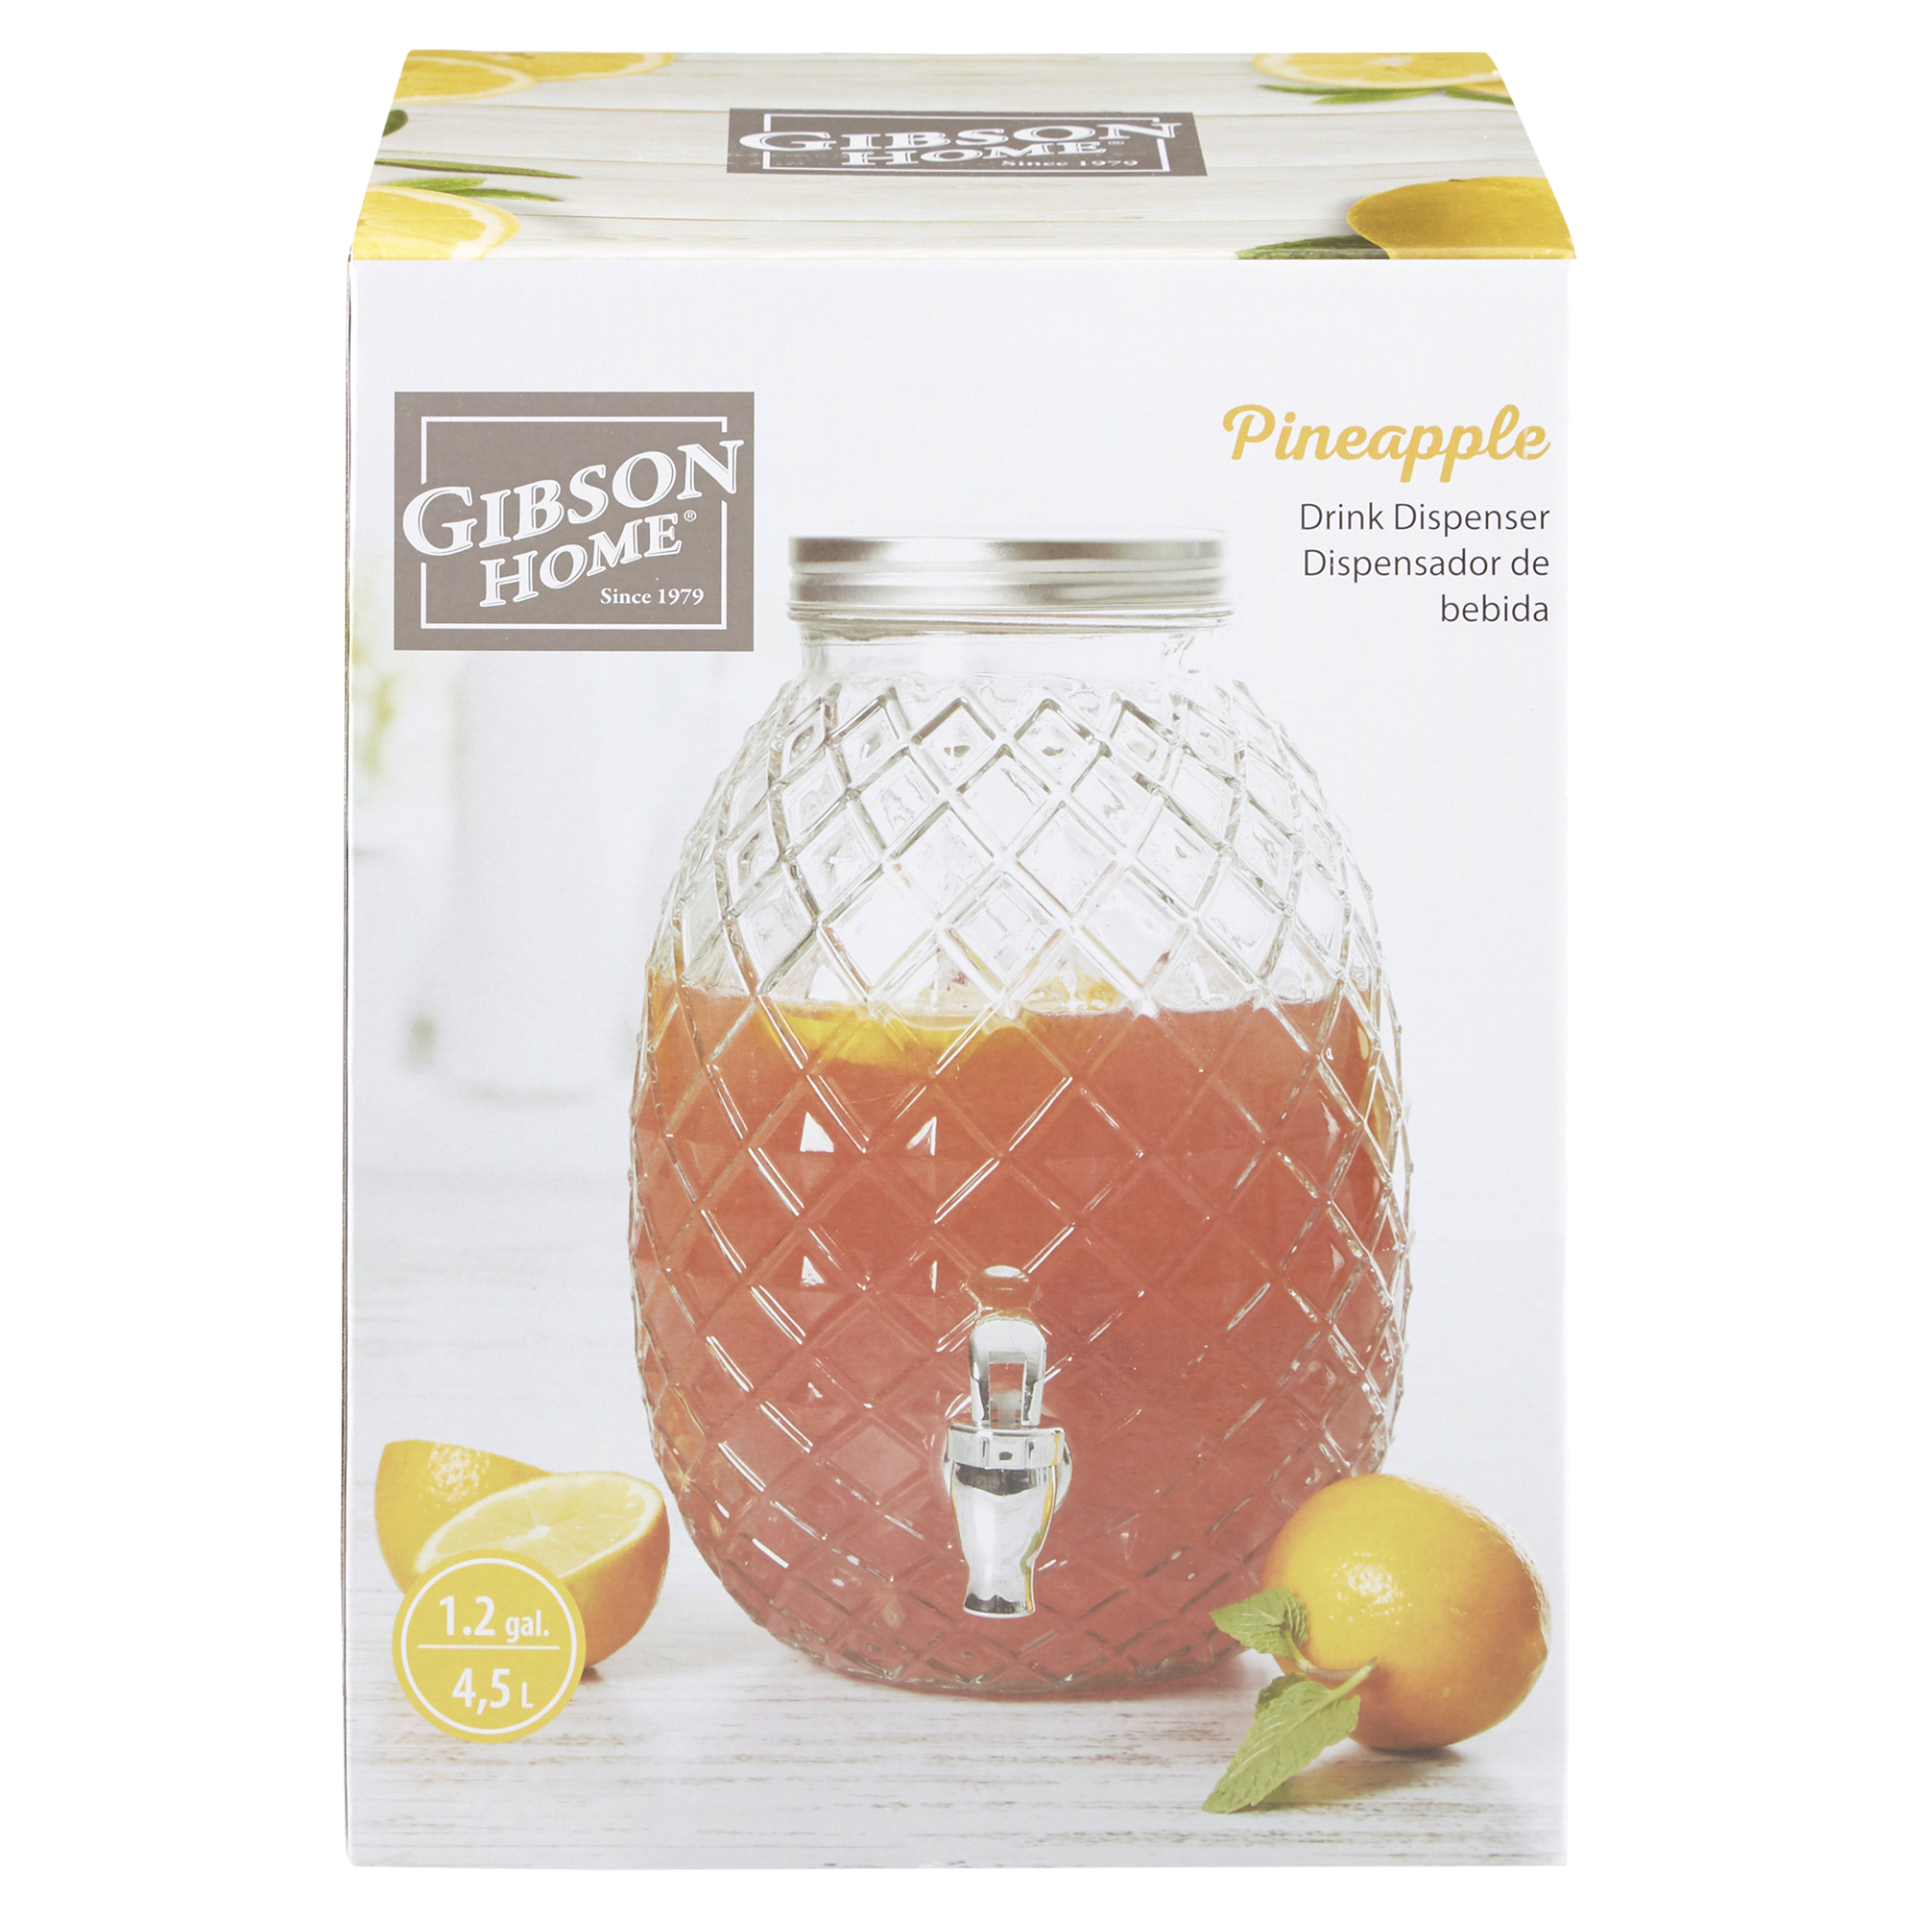 Gibson Home Pineapple Drink Dispenser 1.2 Gallon Clear - Office Depot